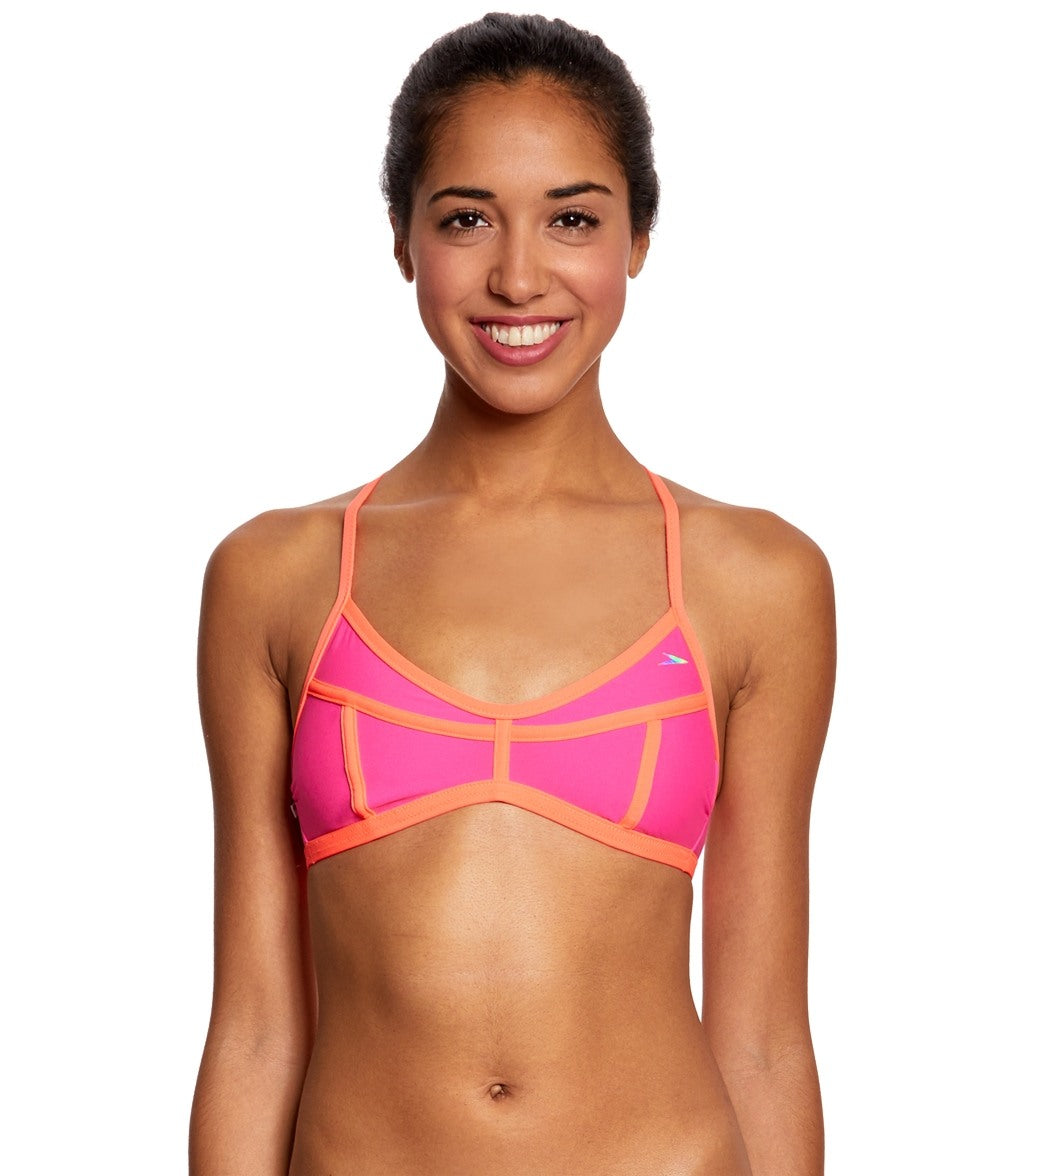 Speedo Missy Franklin Endurance Lite Colorblock Tie Back Swimsuit Top - Electric Pink Xl Polyester/Pbt - Swimoutlet.com